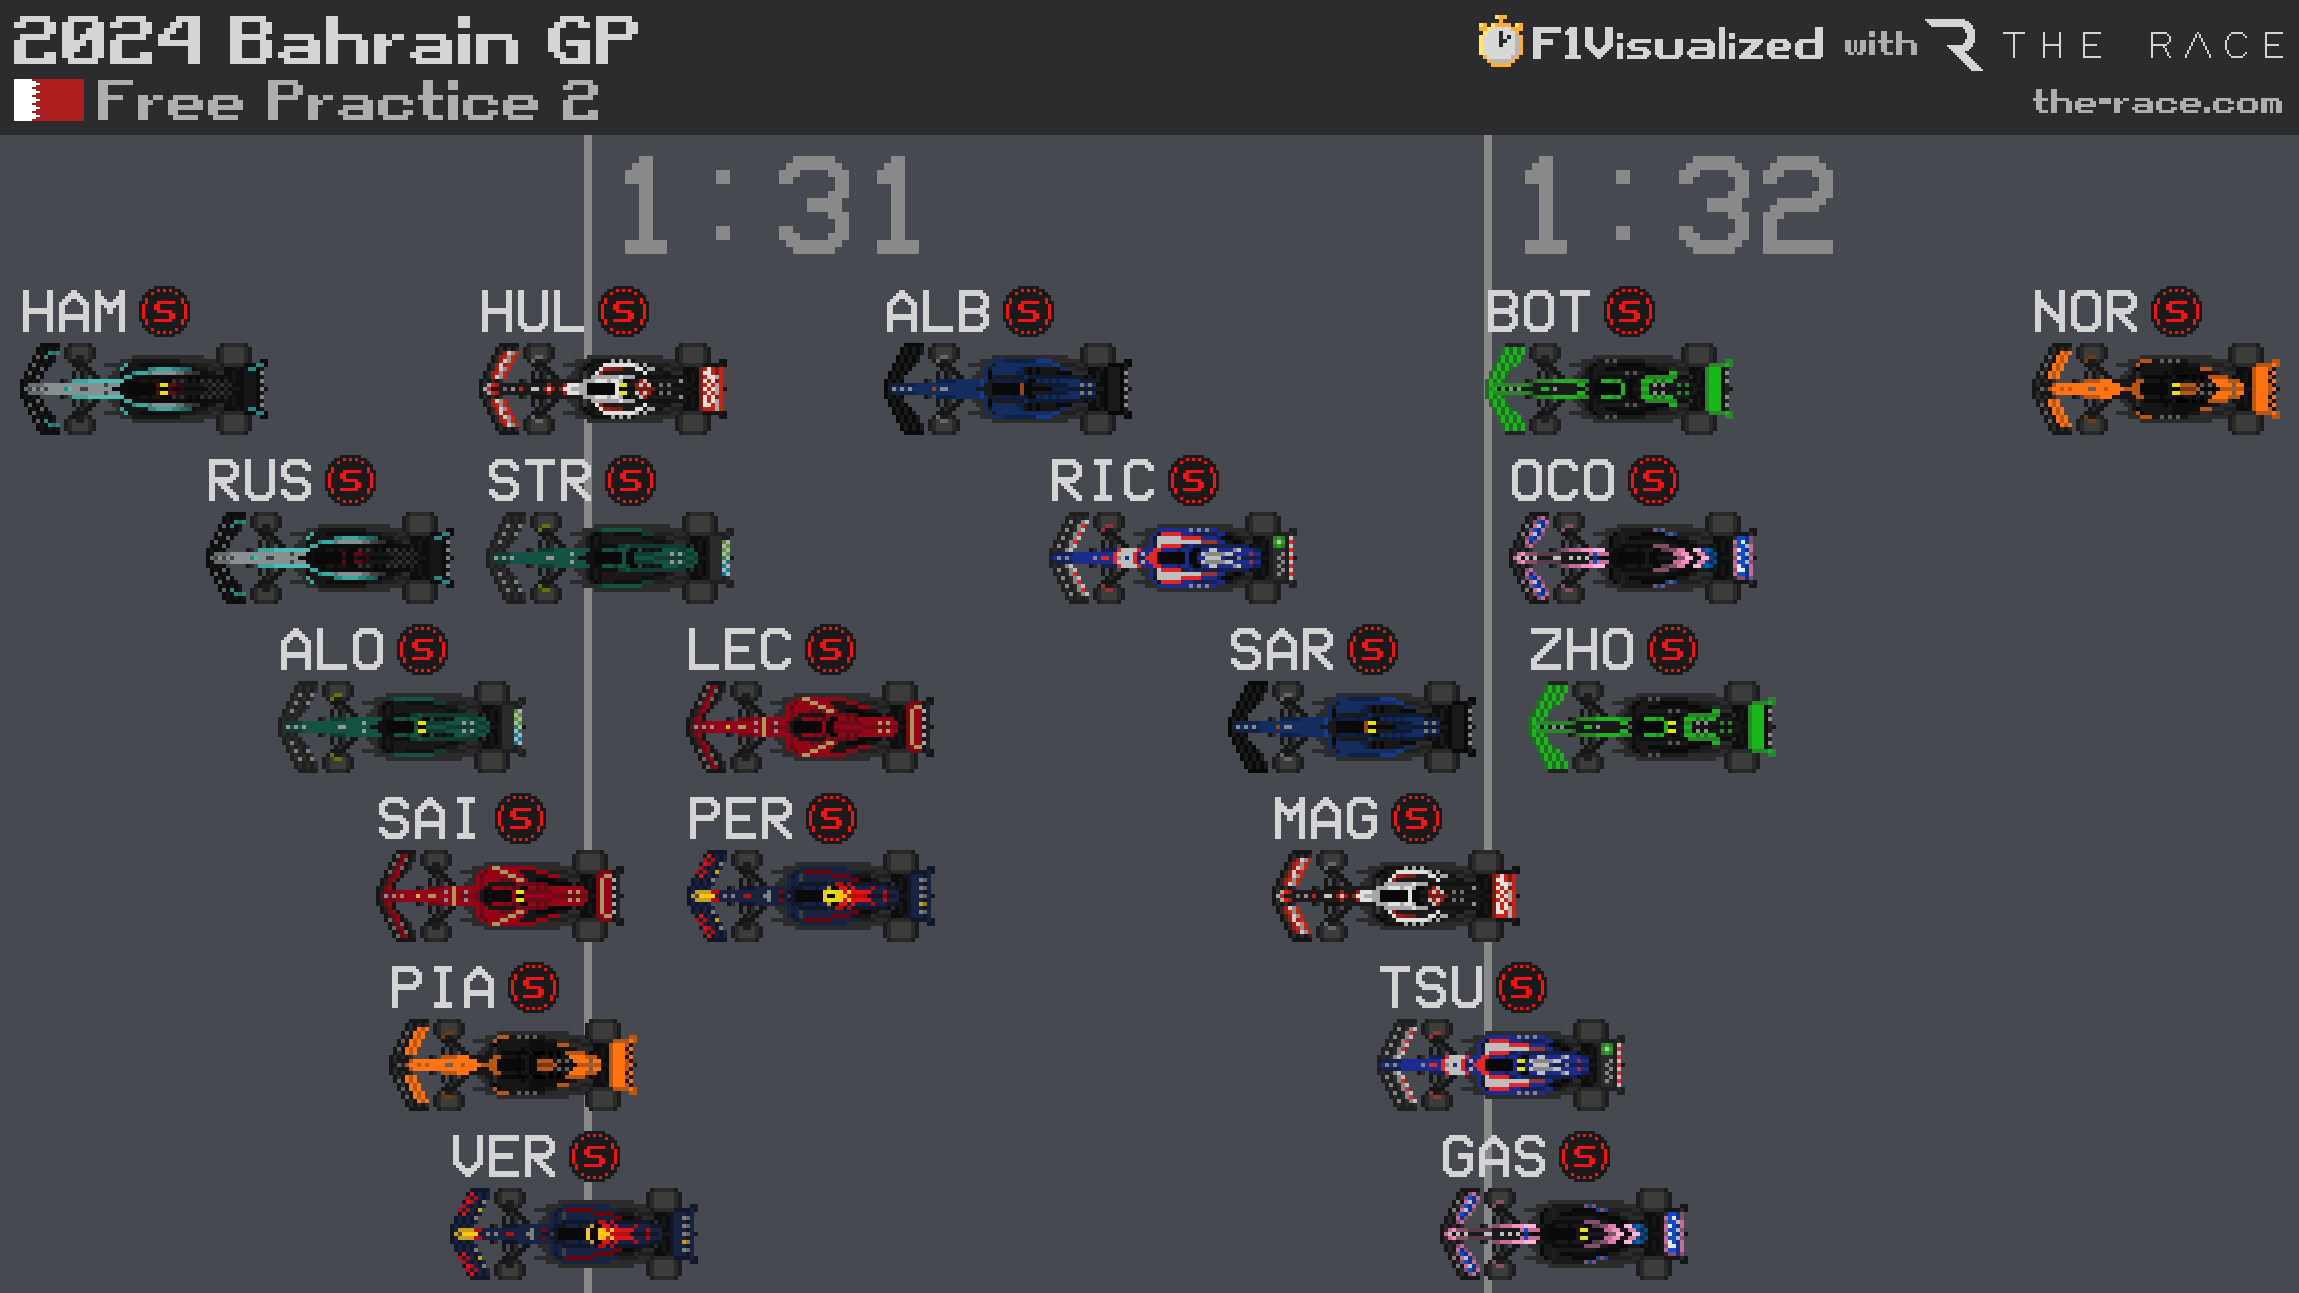 Bahrain GP F1 practice results